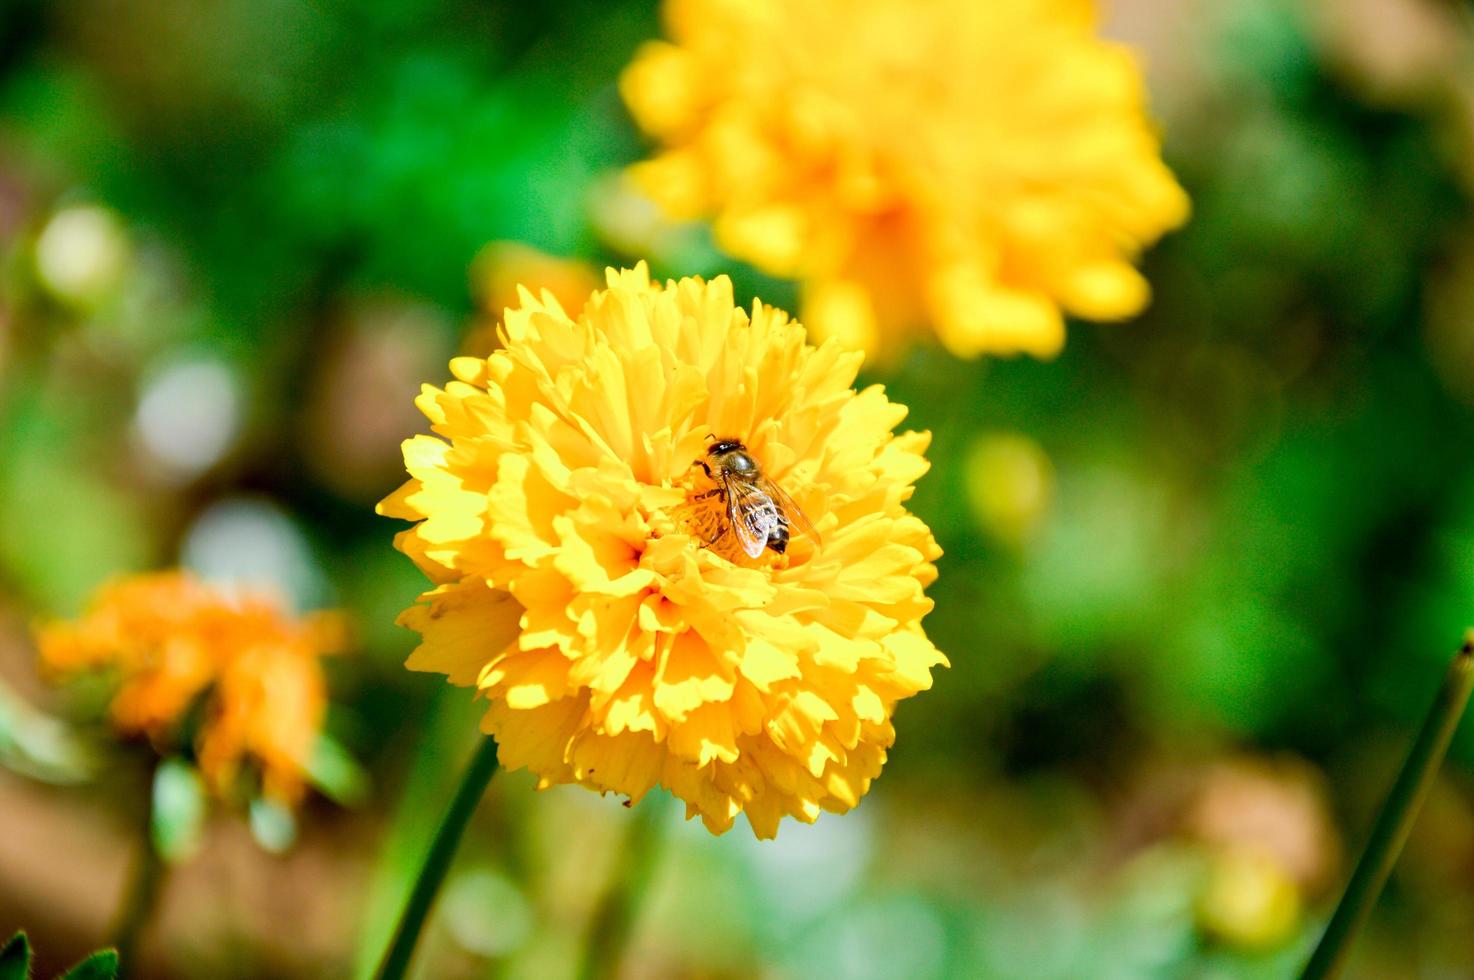  Bee on yellow flower photo